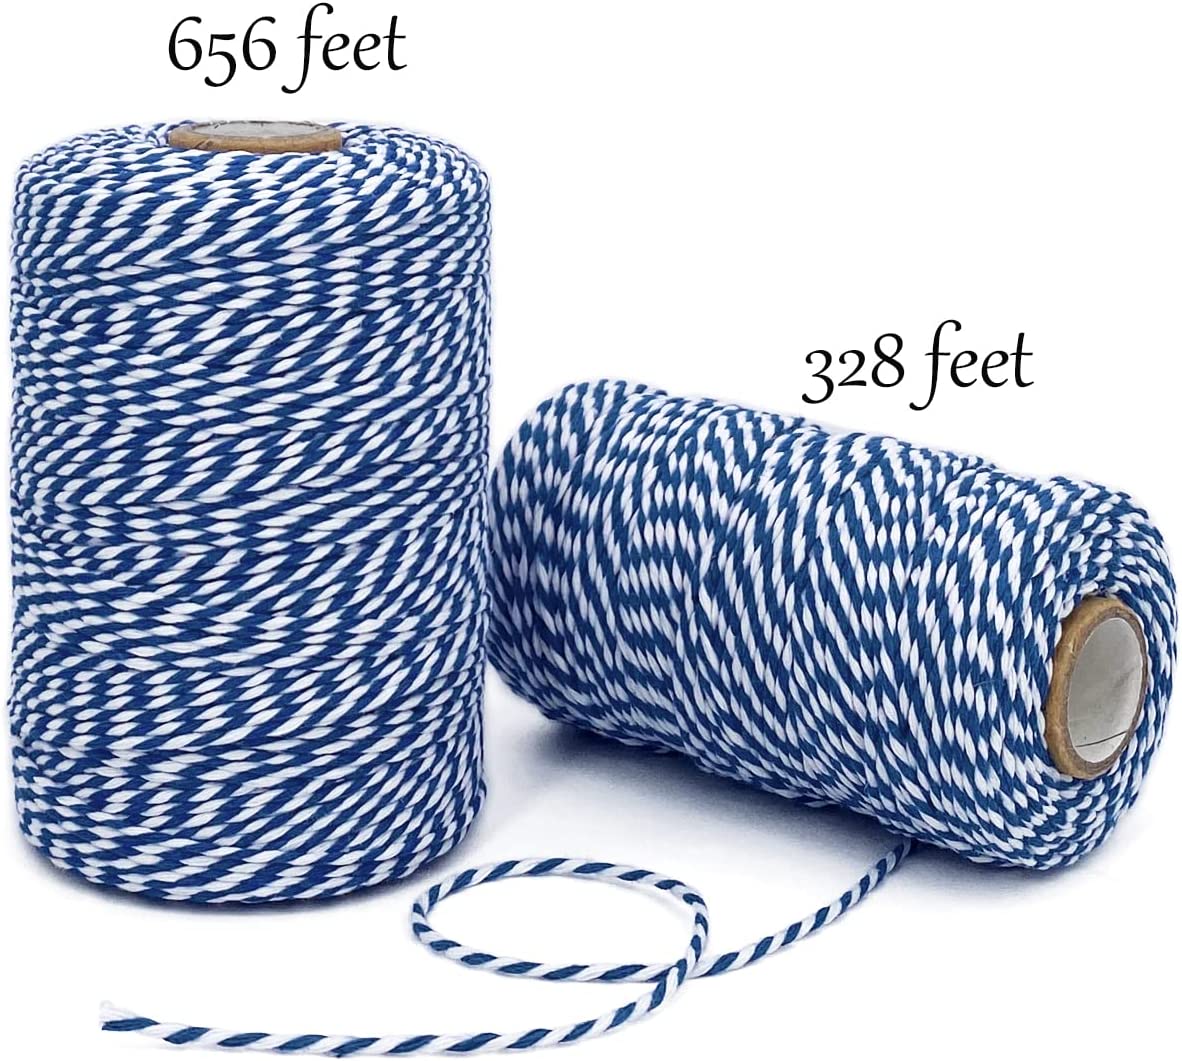 Tie Twine - 2mm or 4mm Industrial/Sports Net Fixing Twine | Garden & Home  Craft DIY String | Garden Twine | White/Blue Strong String (Blue, 2mm Tie